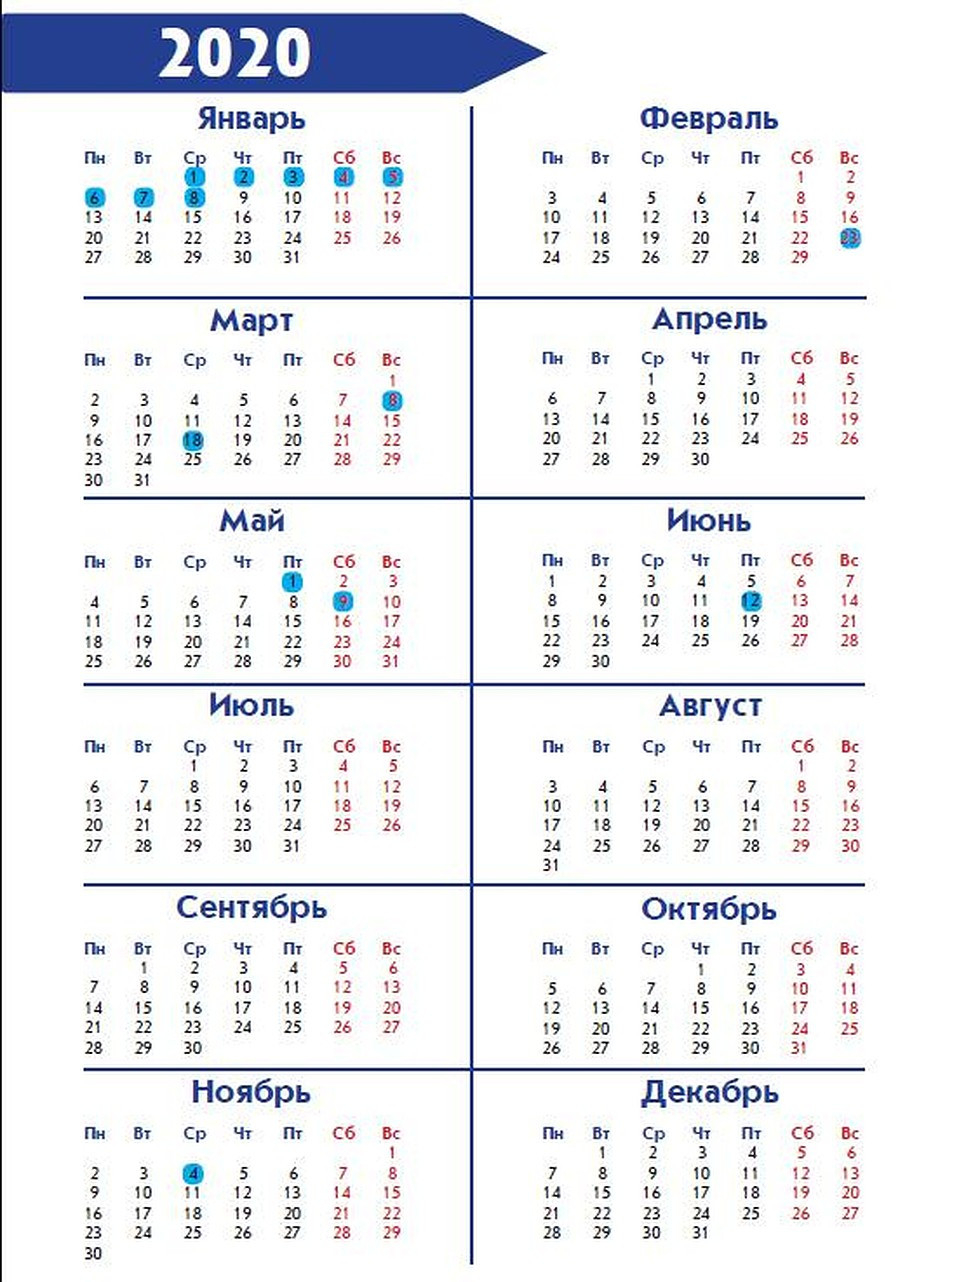 Free Download Depo-Provera Calendar 2021 | Calendar  Depo-Provera Shot Calendar 2021